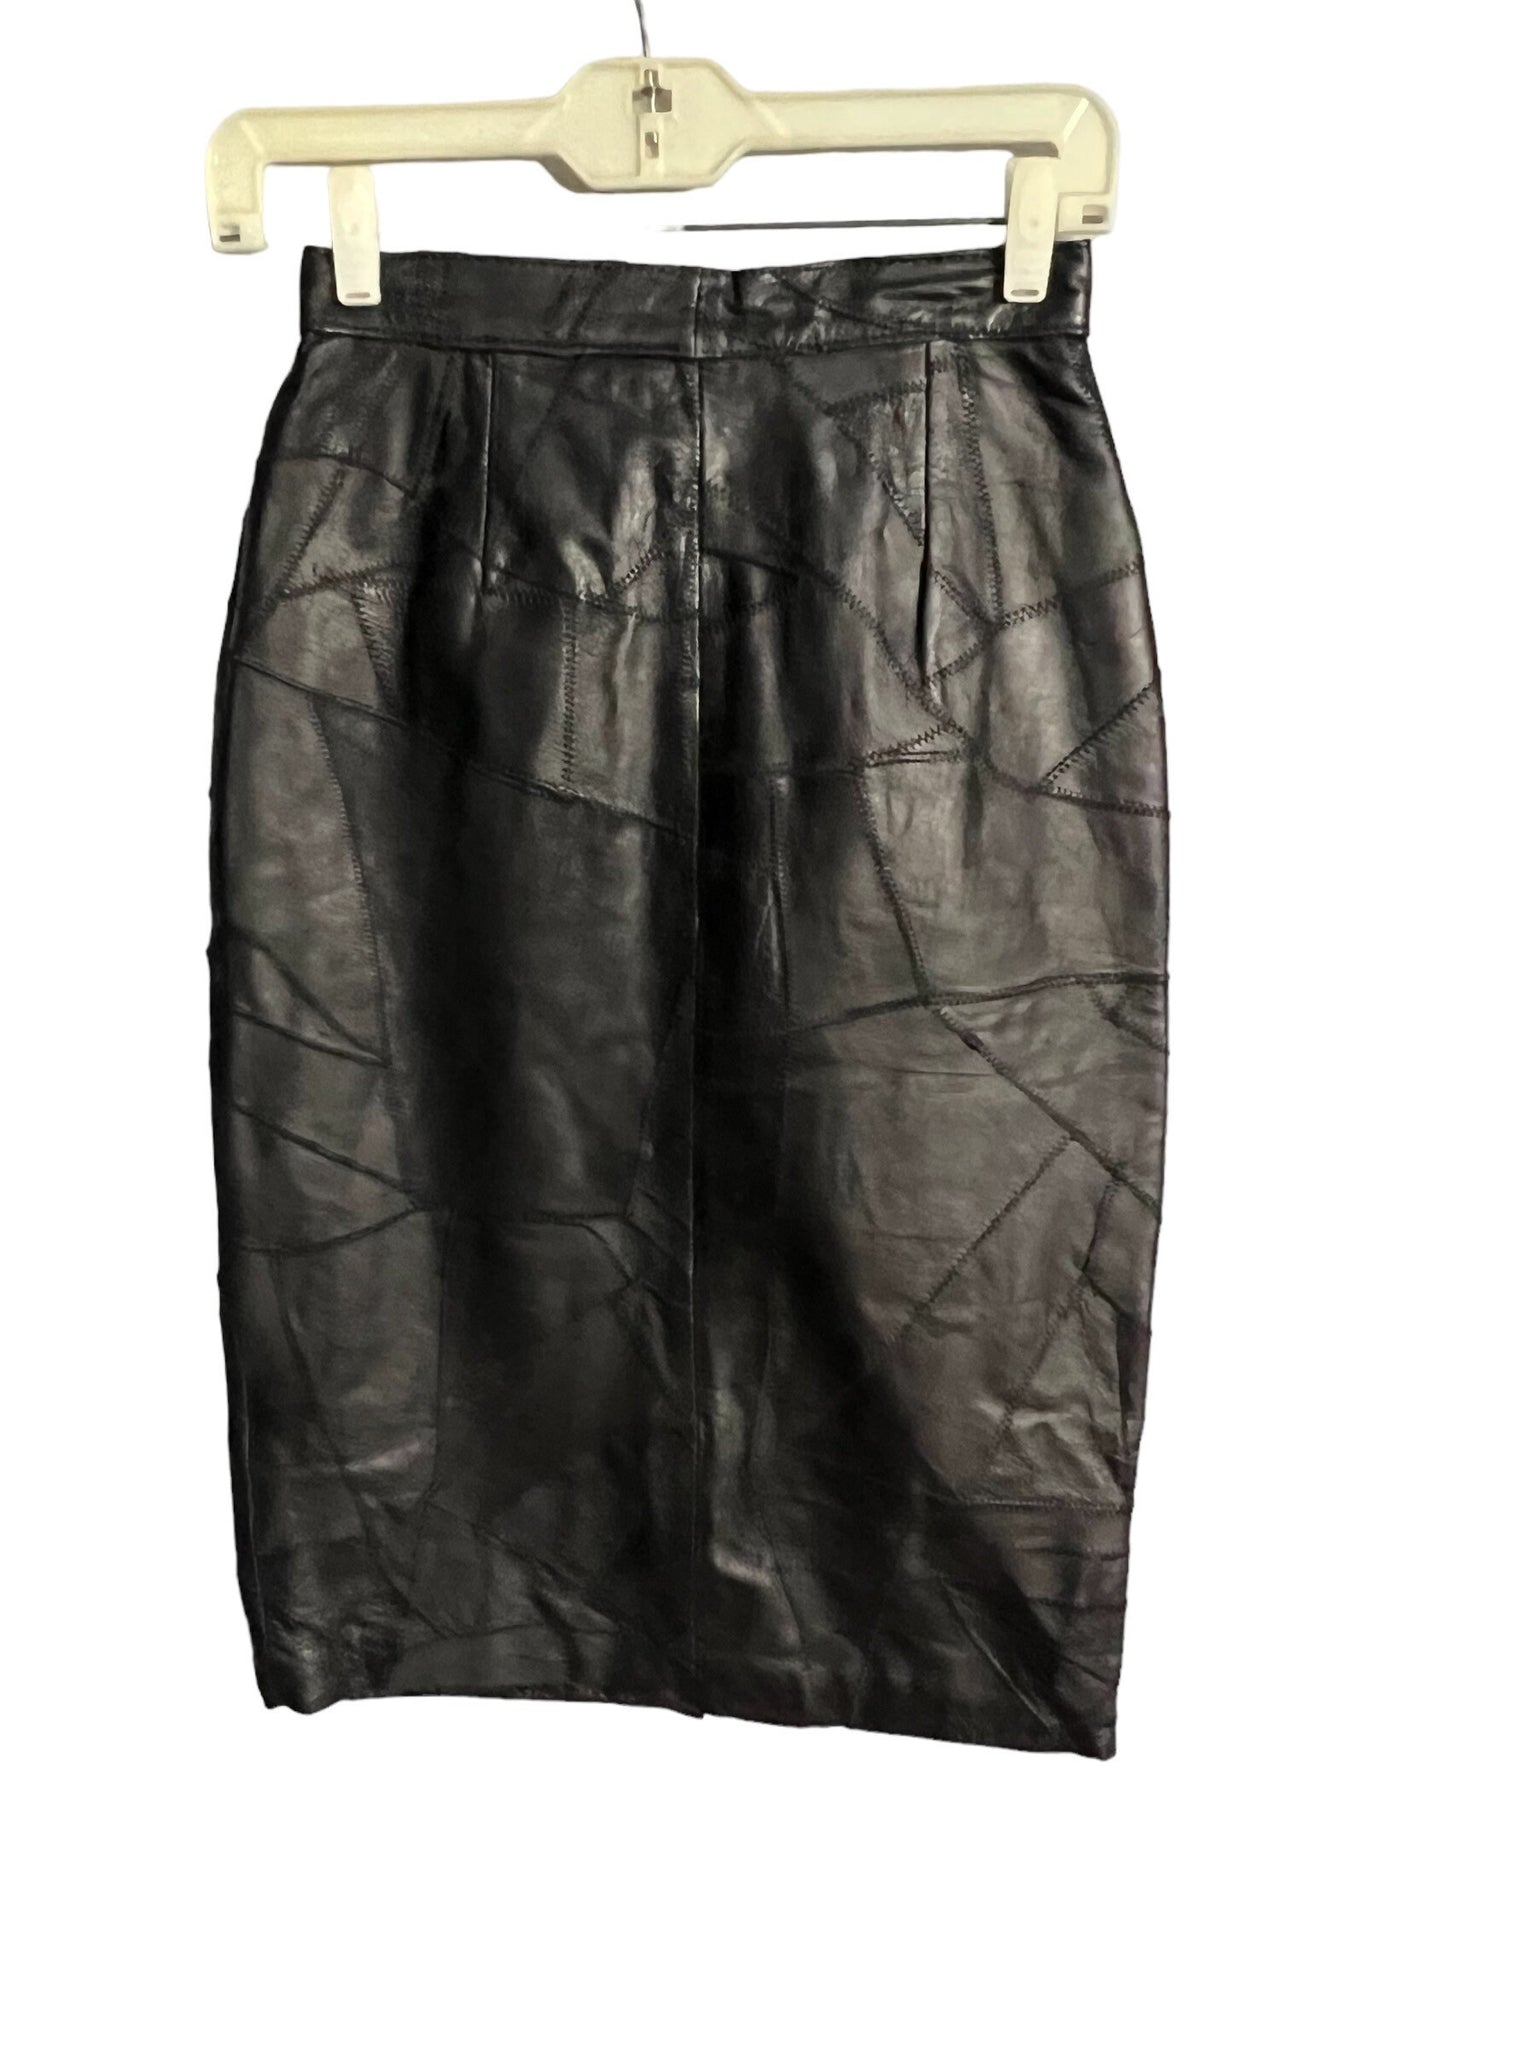 Vintage 80's black patchwork skirt 5/6 Alamos